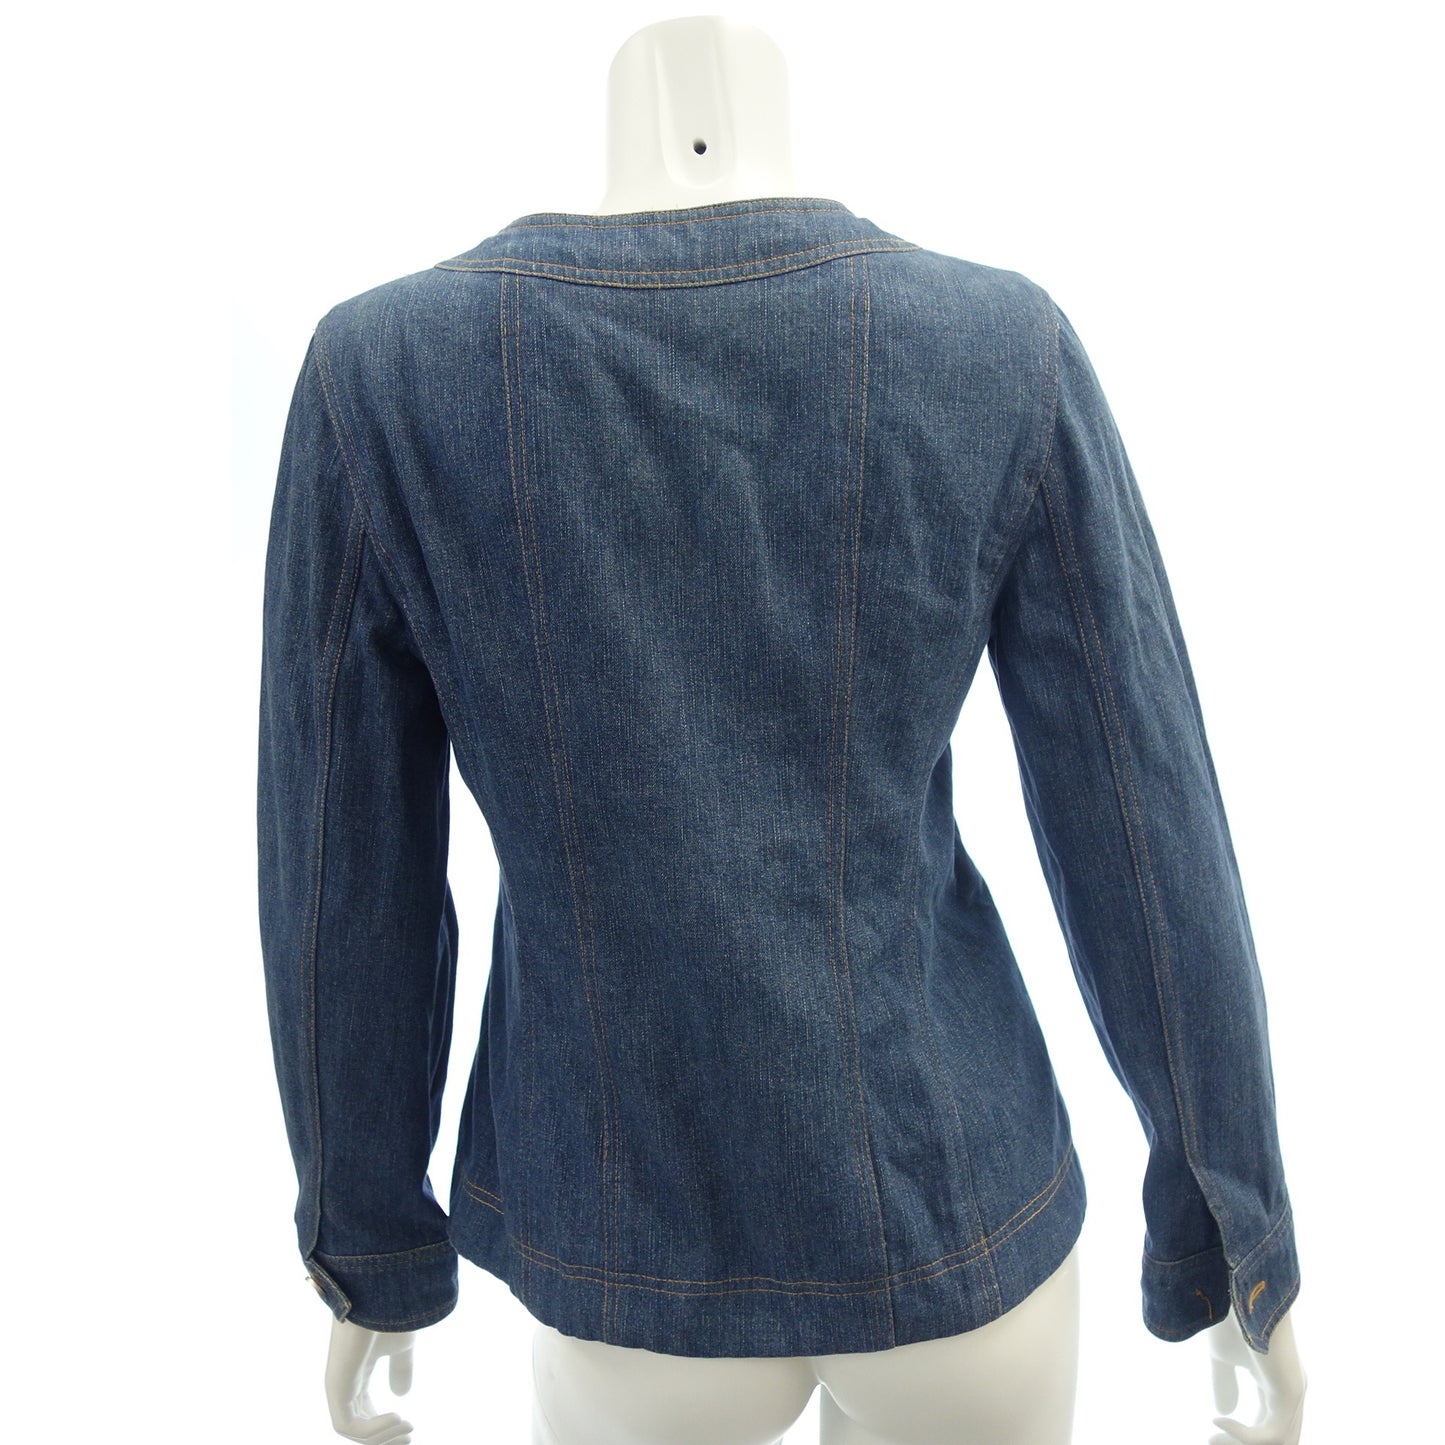 Used ◆CHANEL Collarless Denim Jacket Coco Button 99C Tweed Lining Ladies Size 40 Indigo CHANEL [AFB47] 